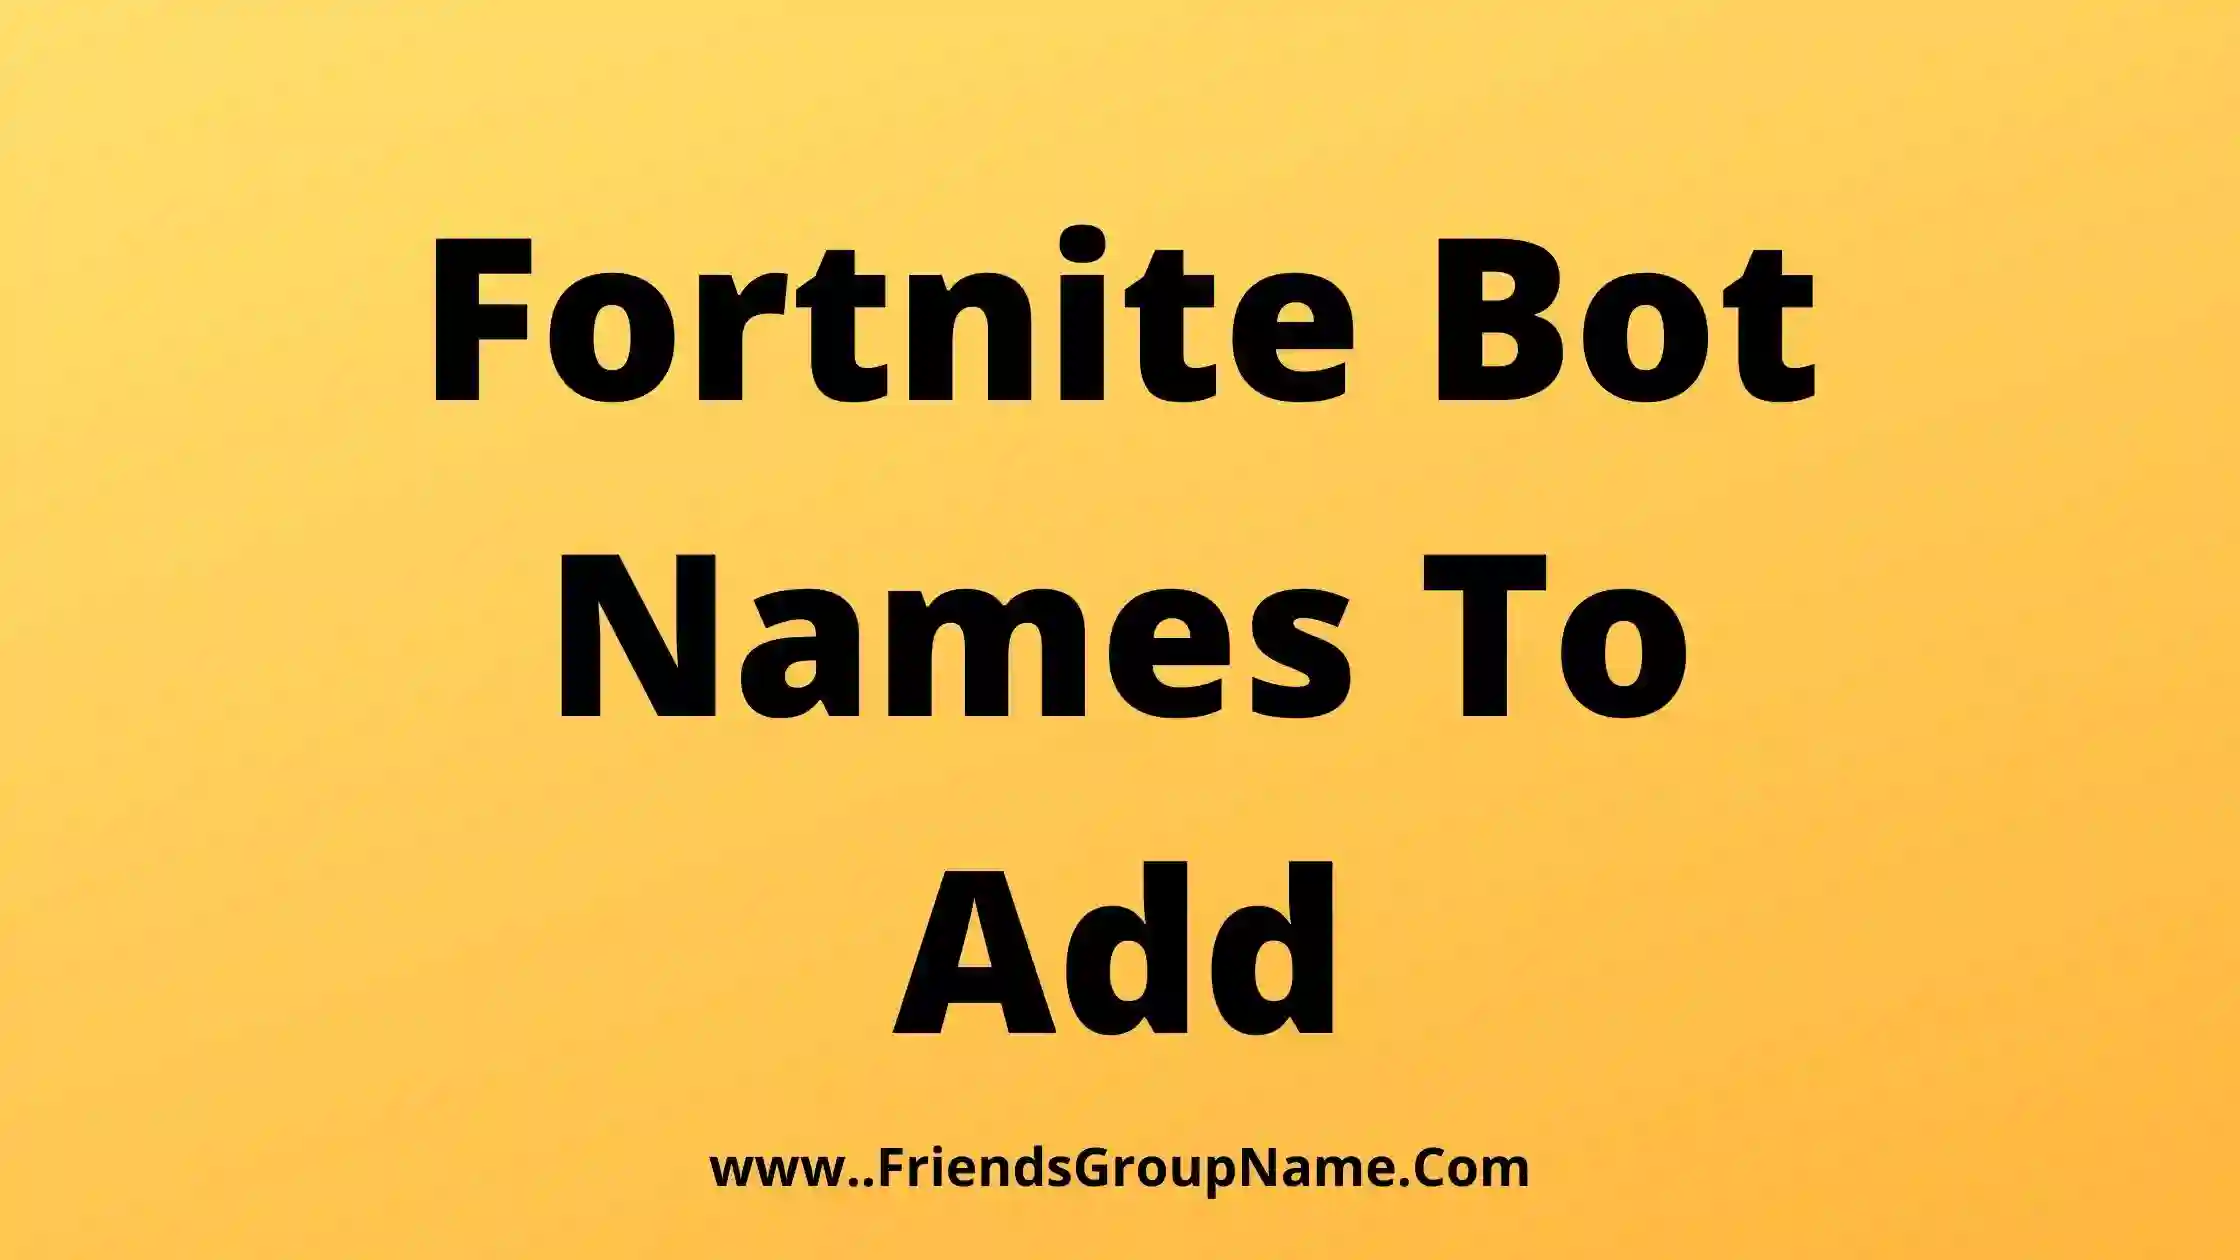 Fortnite Bot Names To Add